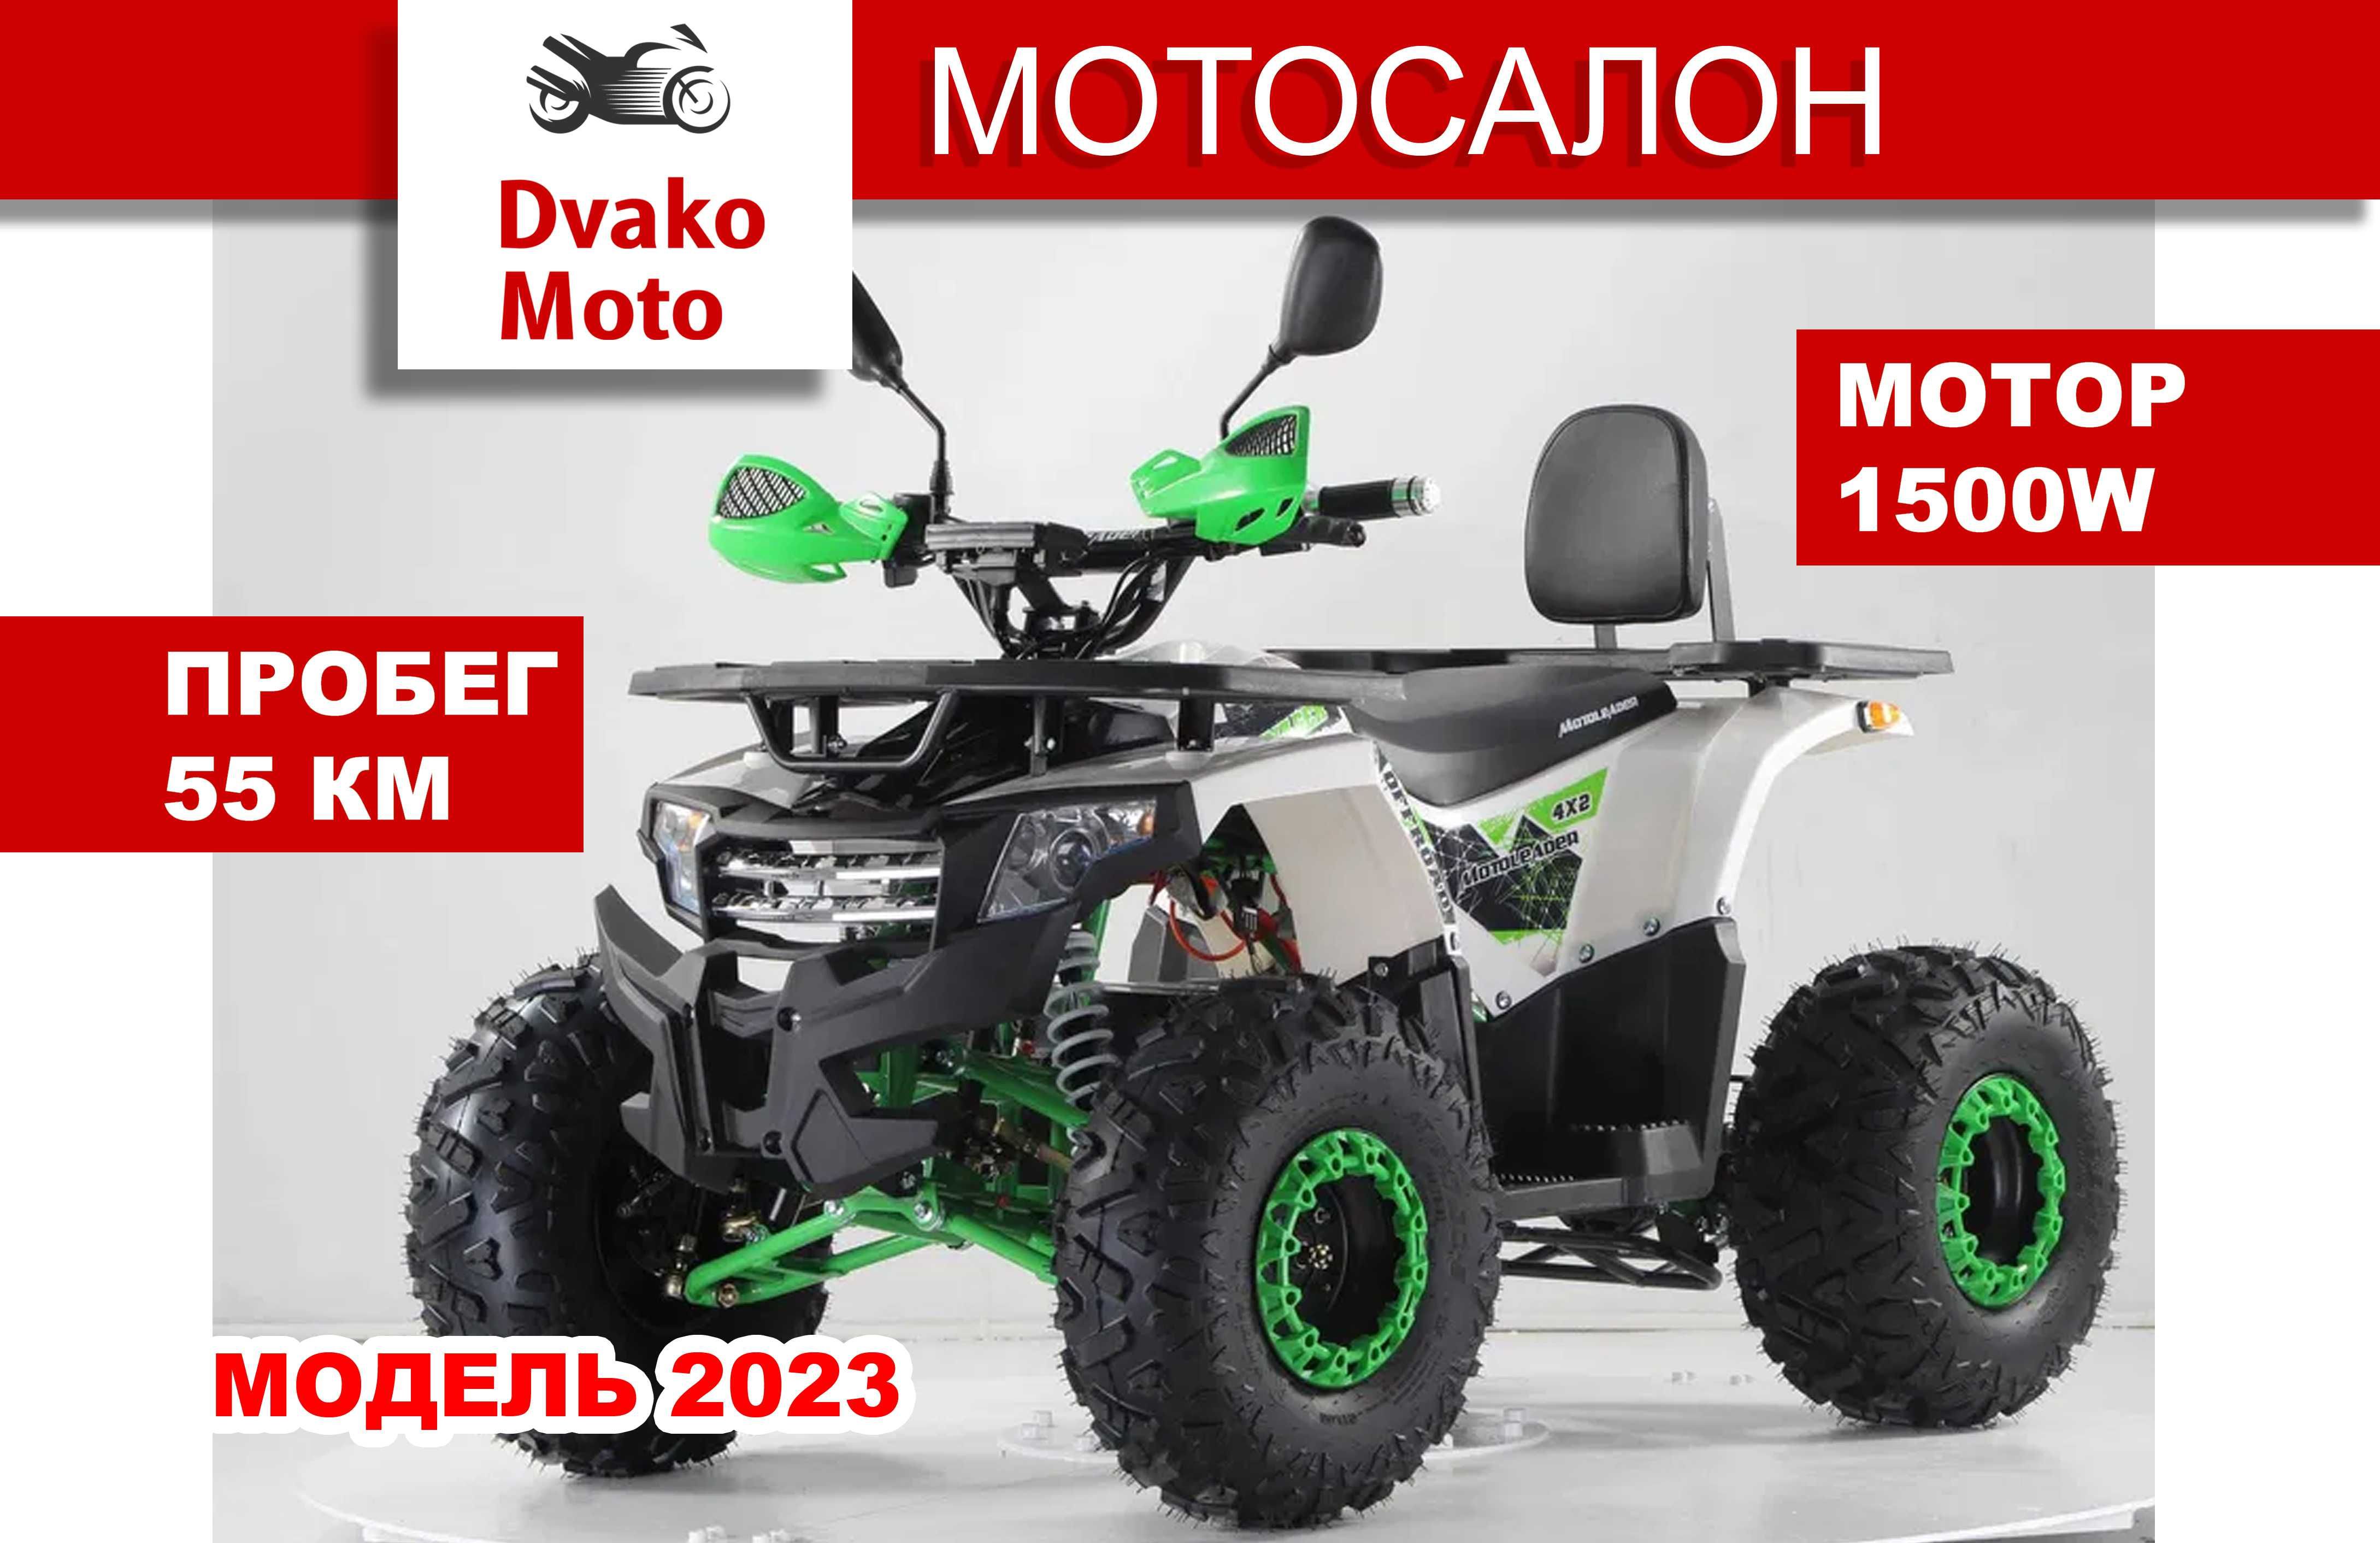 Новый Подростковый Электроквадроцикл TeenageR 1500W (КВАДРОСАЛОН)!!